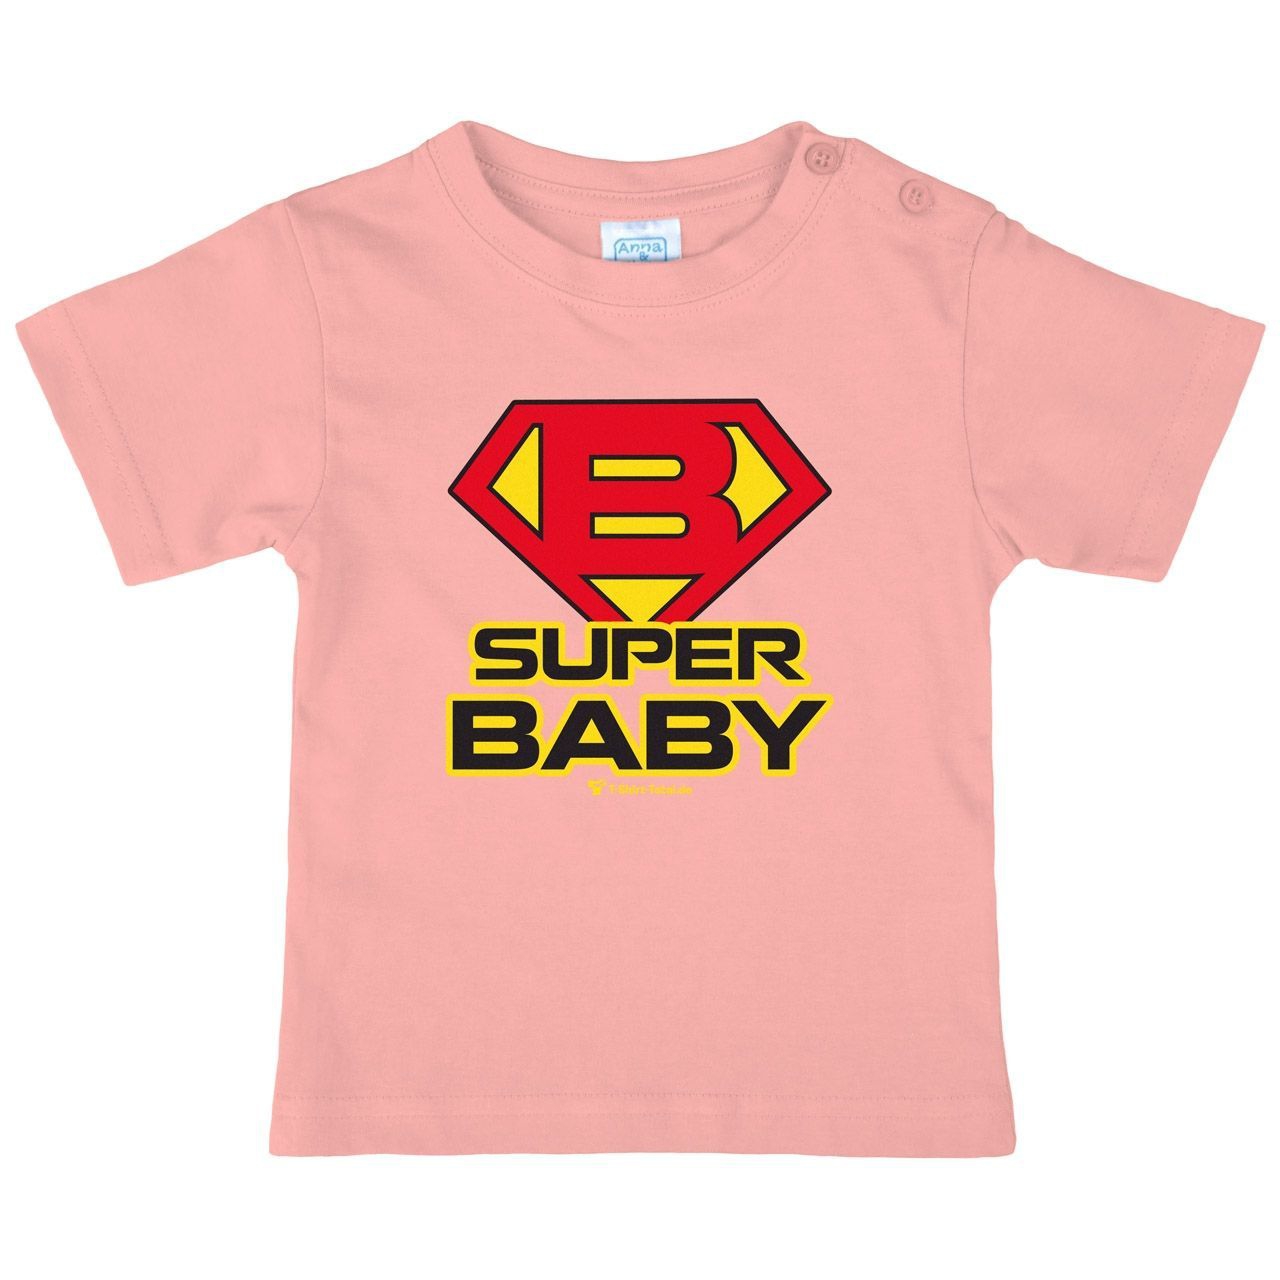 Super Baby Kinder T-Shirt rosa 92